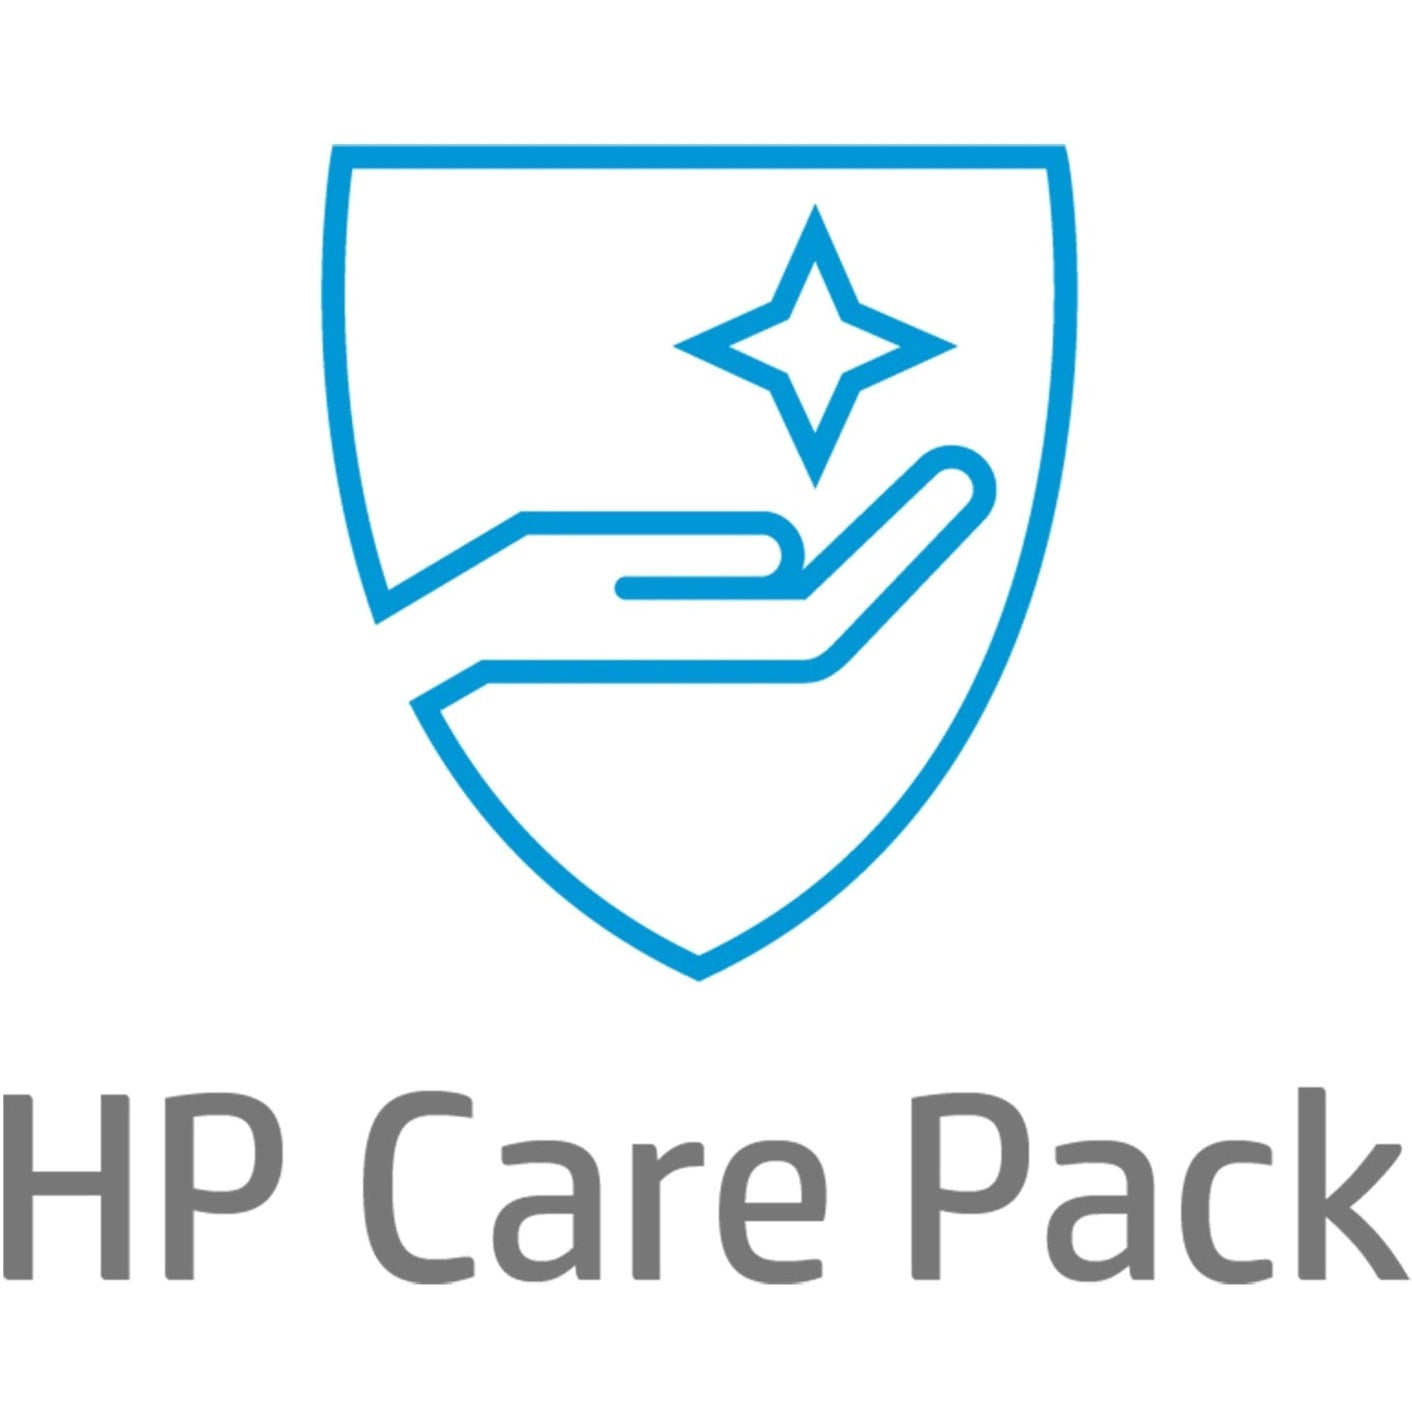 HP Care Pack - 4 Year - Warranty (U9UW8E)